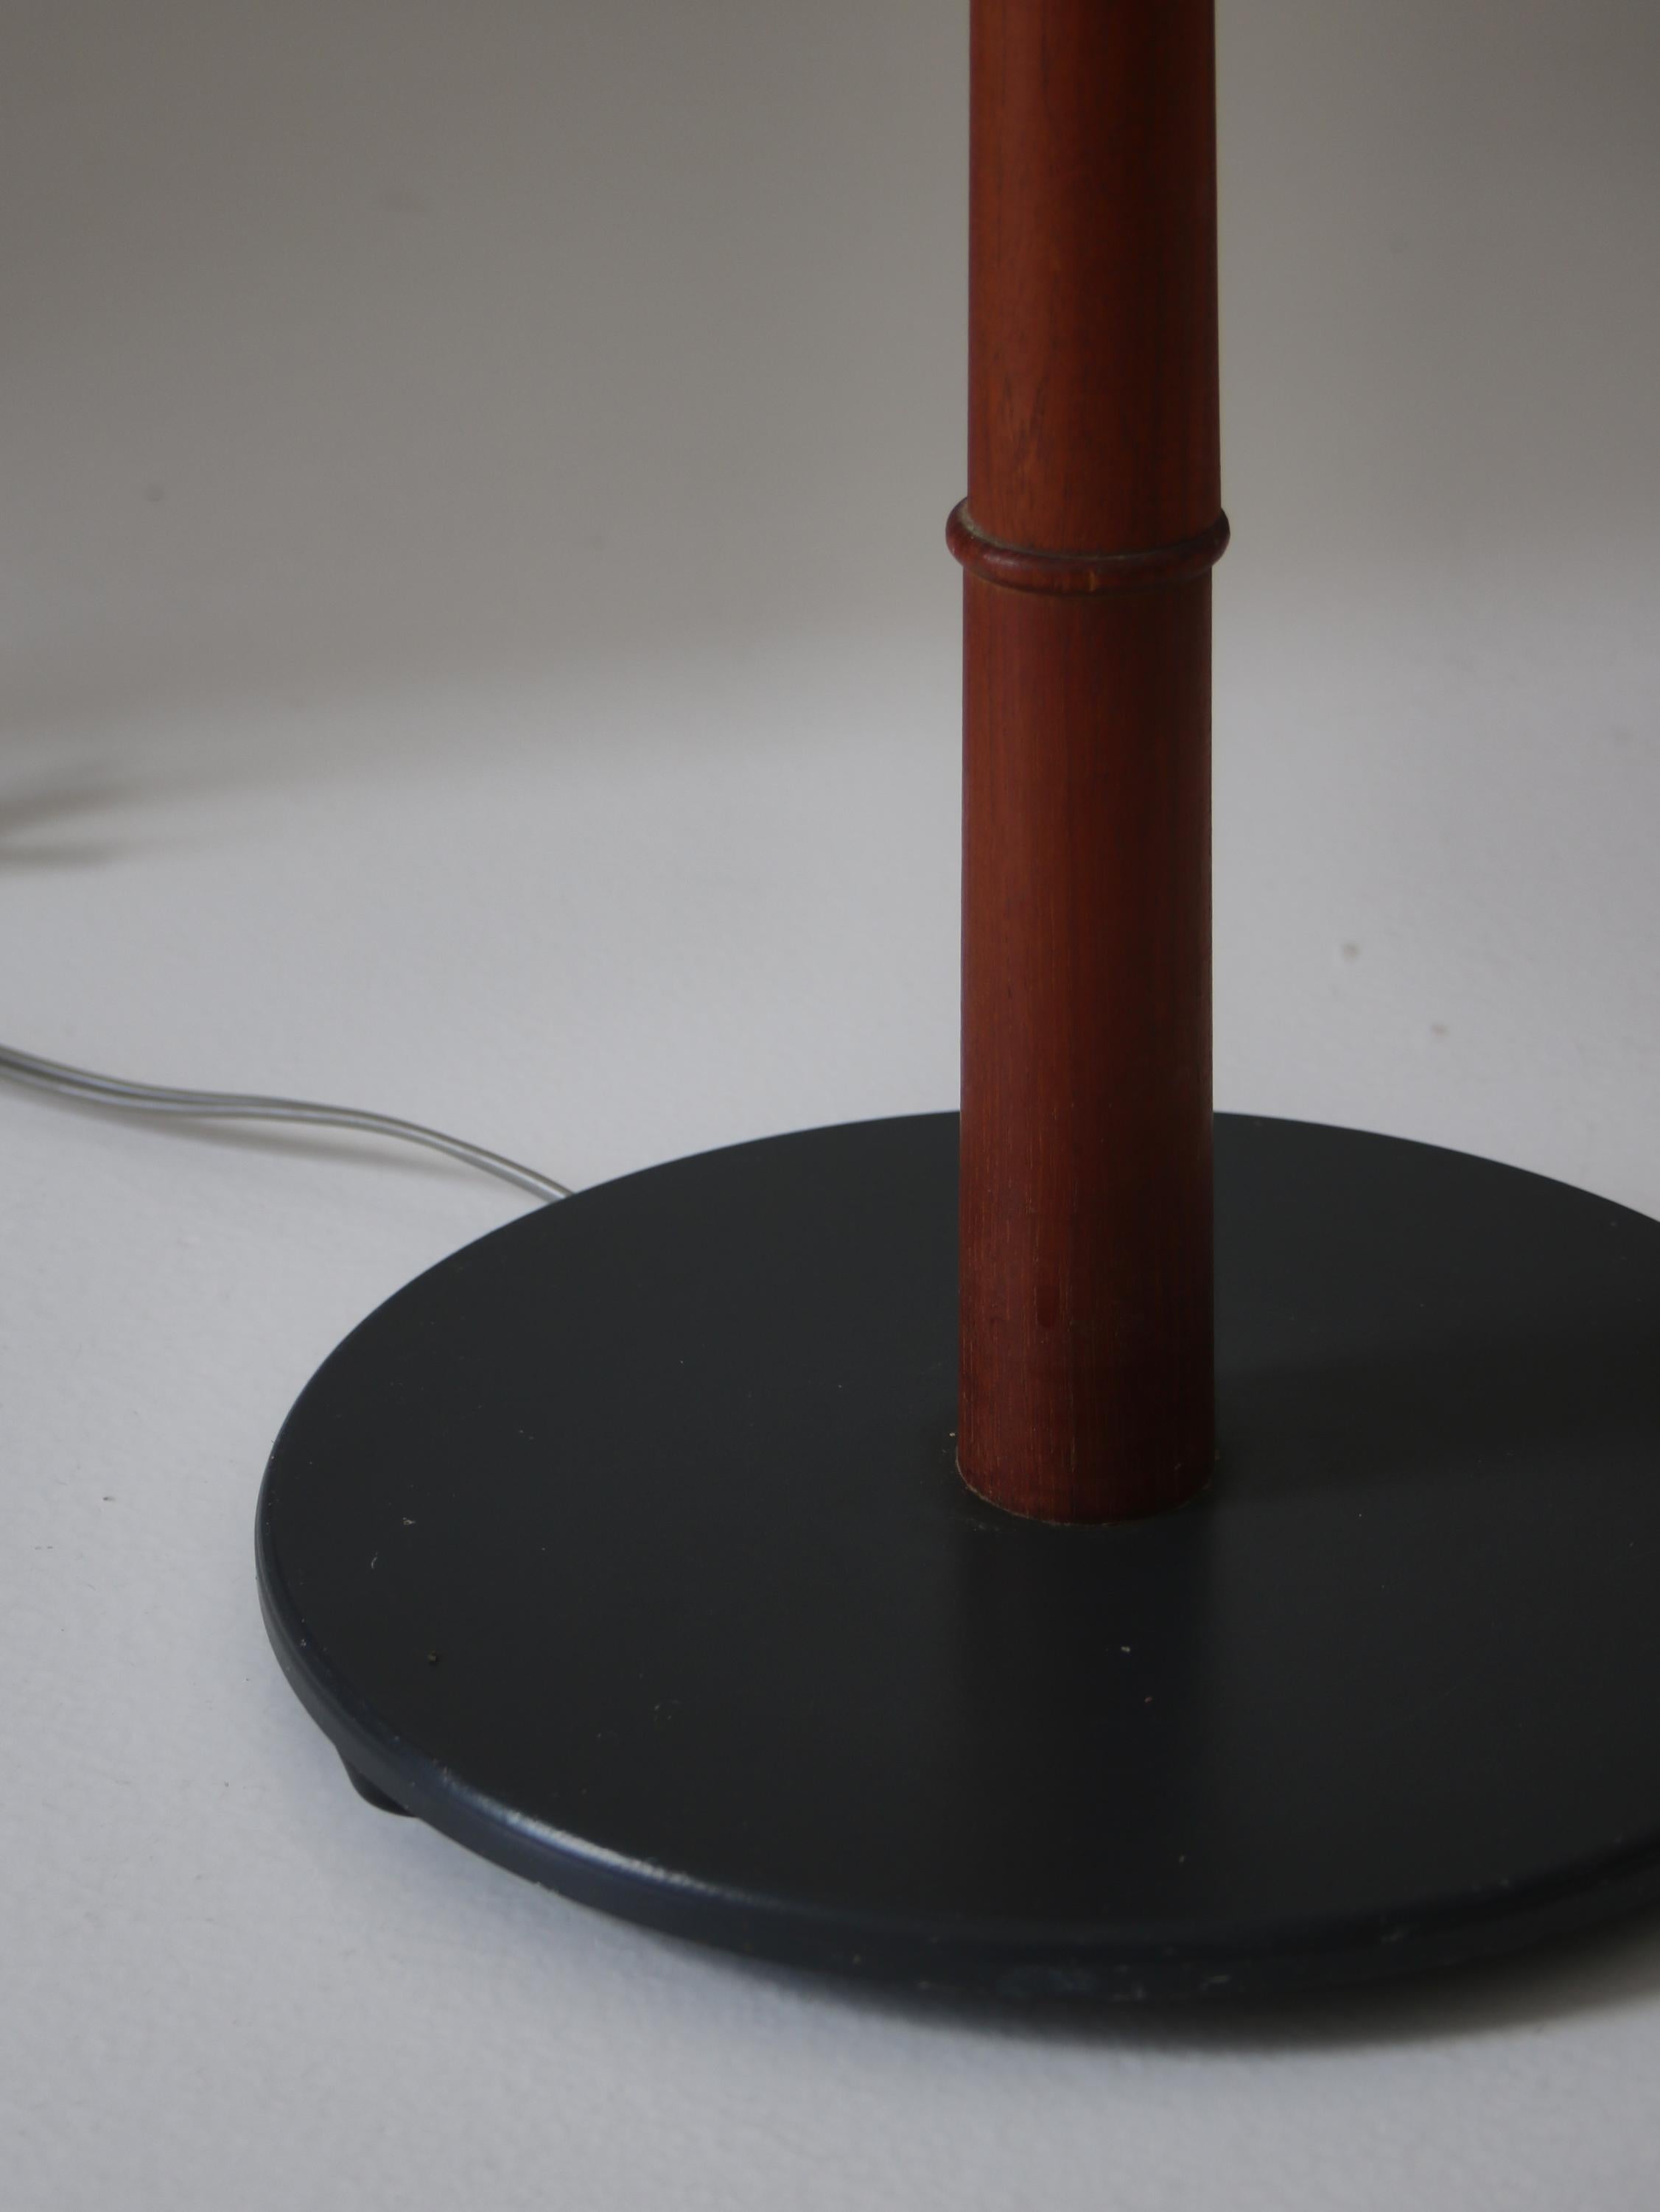 Danish Modern Floor Lamp in Teak with Hand Folded Le Klint Shade, 1950s For Sale 5